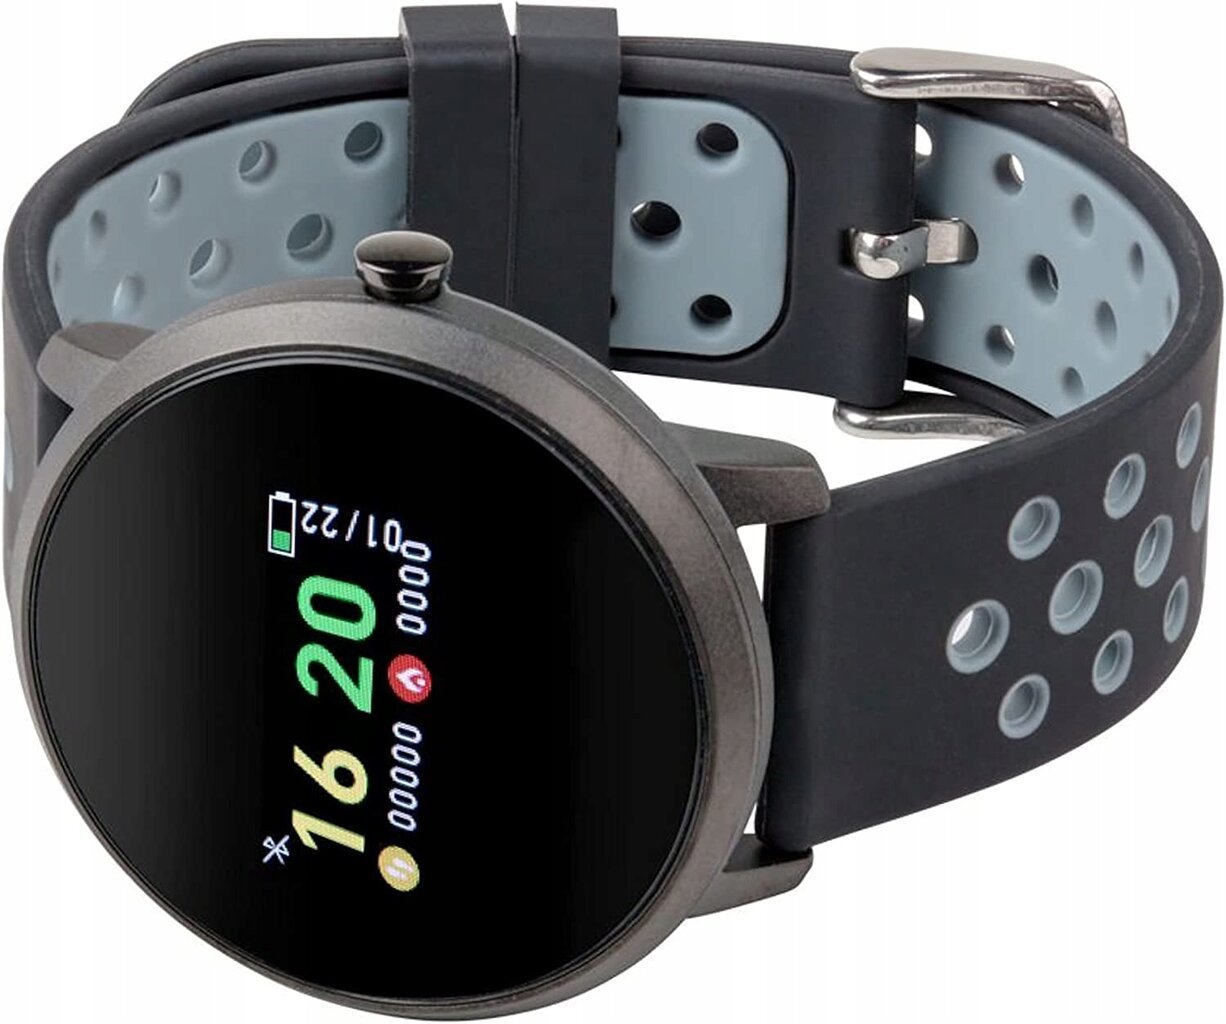 Medion Life E1800 Black цена и информация | Išmanieji laikrodžiai (smartwatch) | pigu.lt